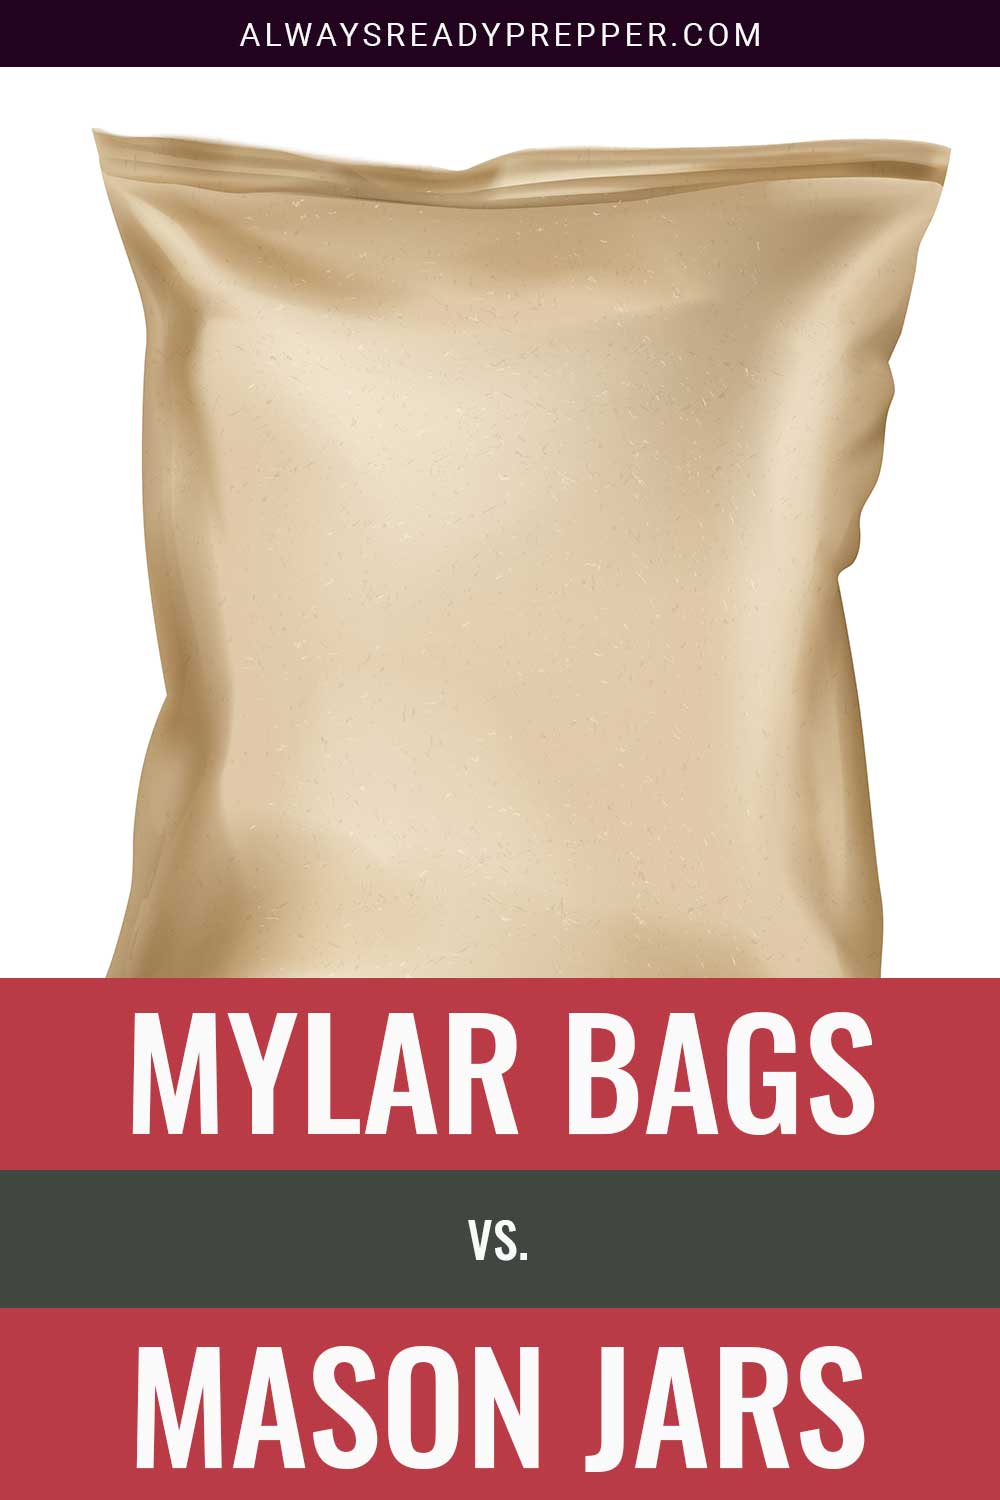 A golden brown mylar bag - Mylar Bags vs. Mason Jars.